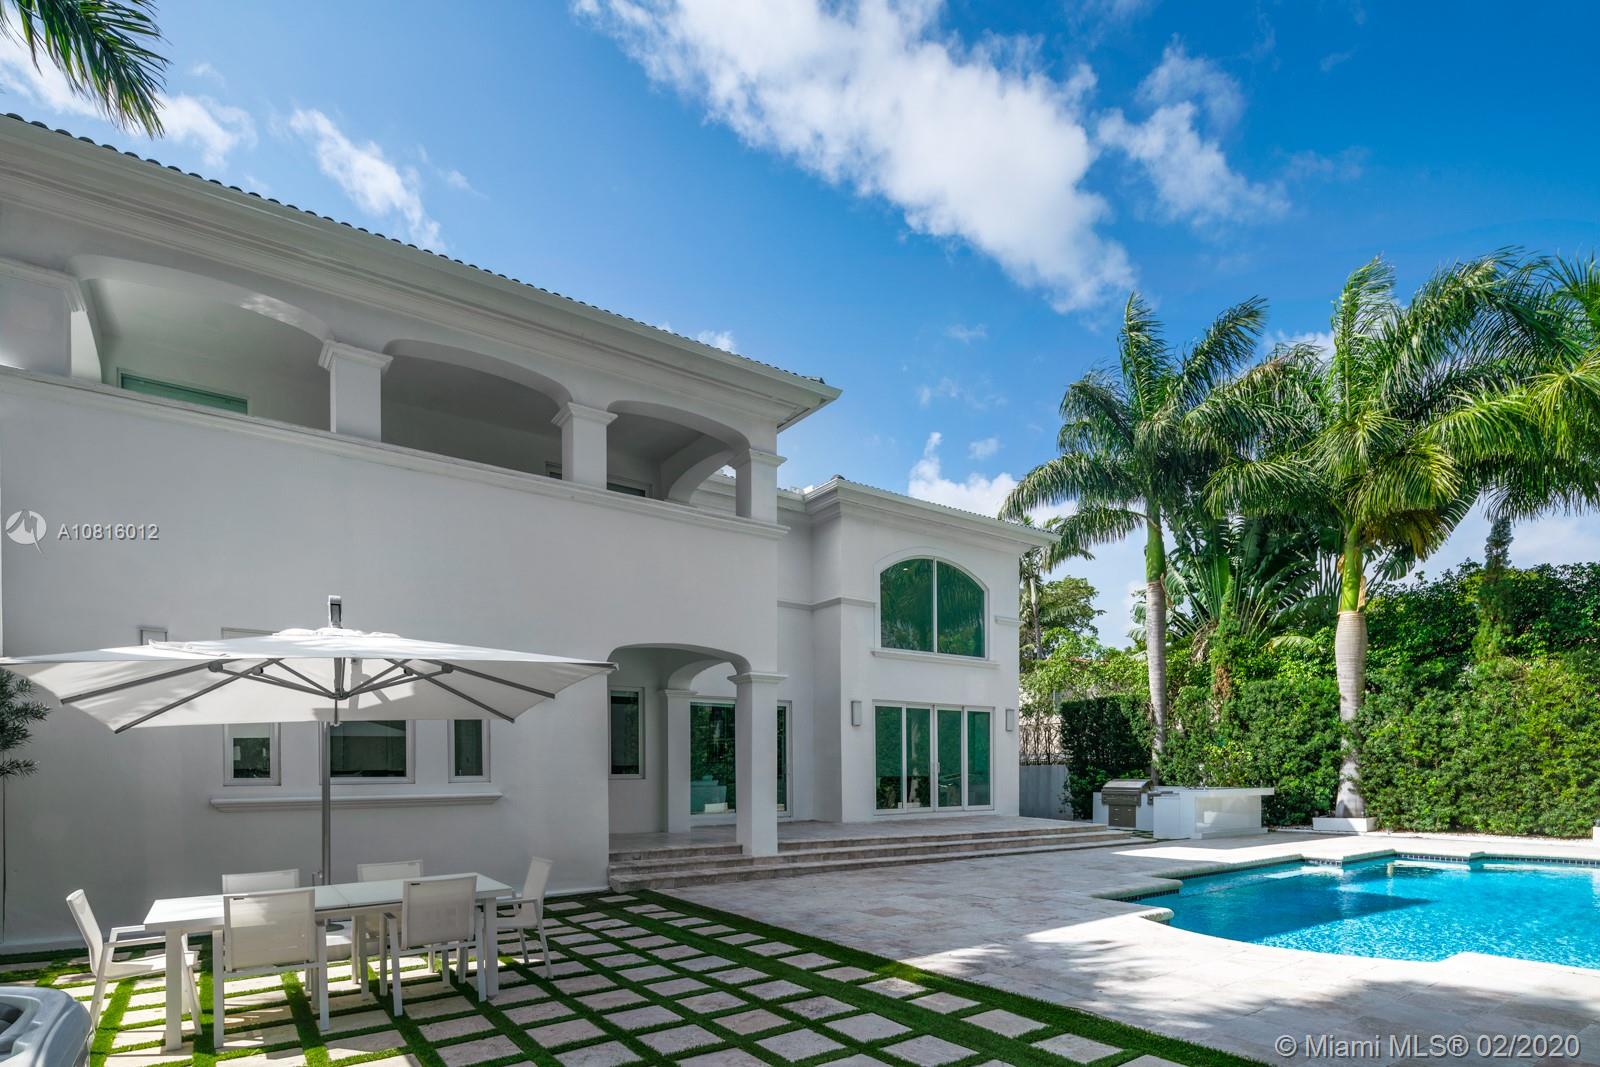 Nautilus, Miami Beach : Homes for Sale in Nautilus : Miami Beach Nautilus Homes for Sale ...